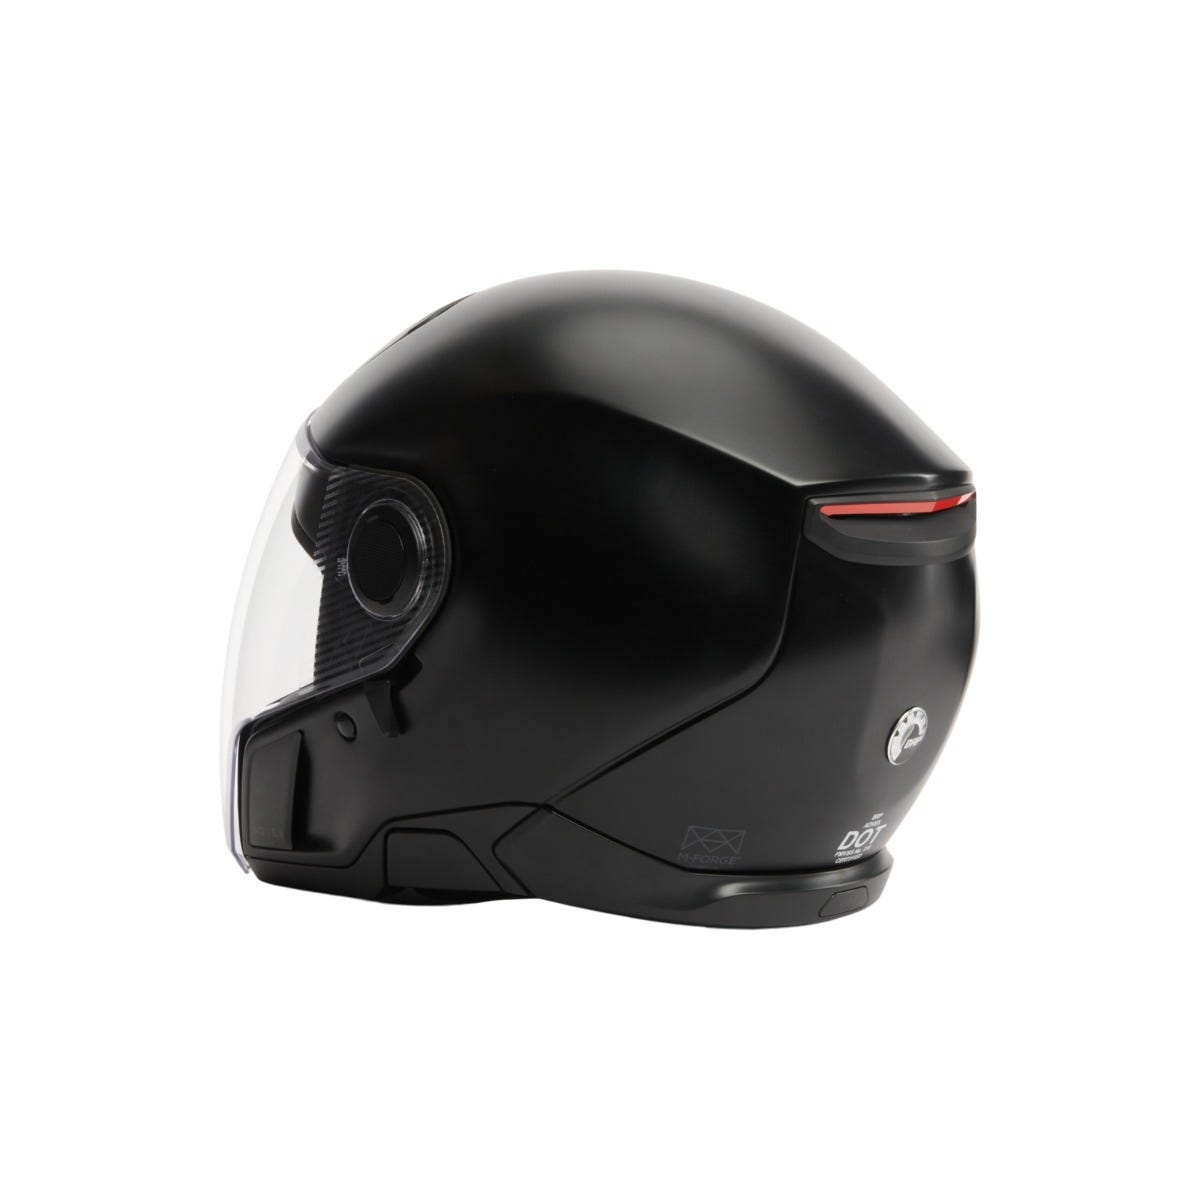 Advex Jet Helmet